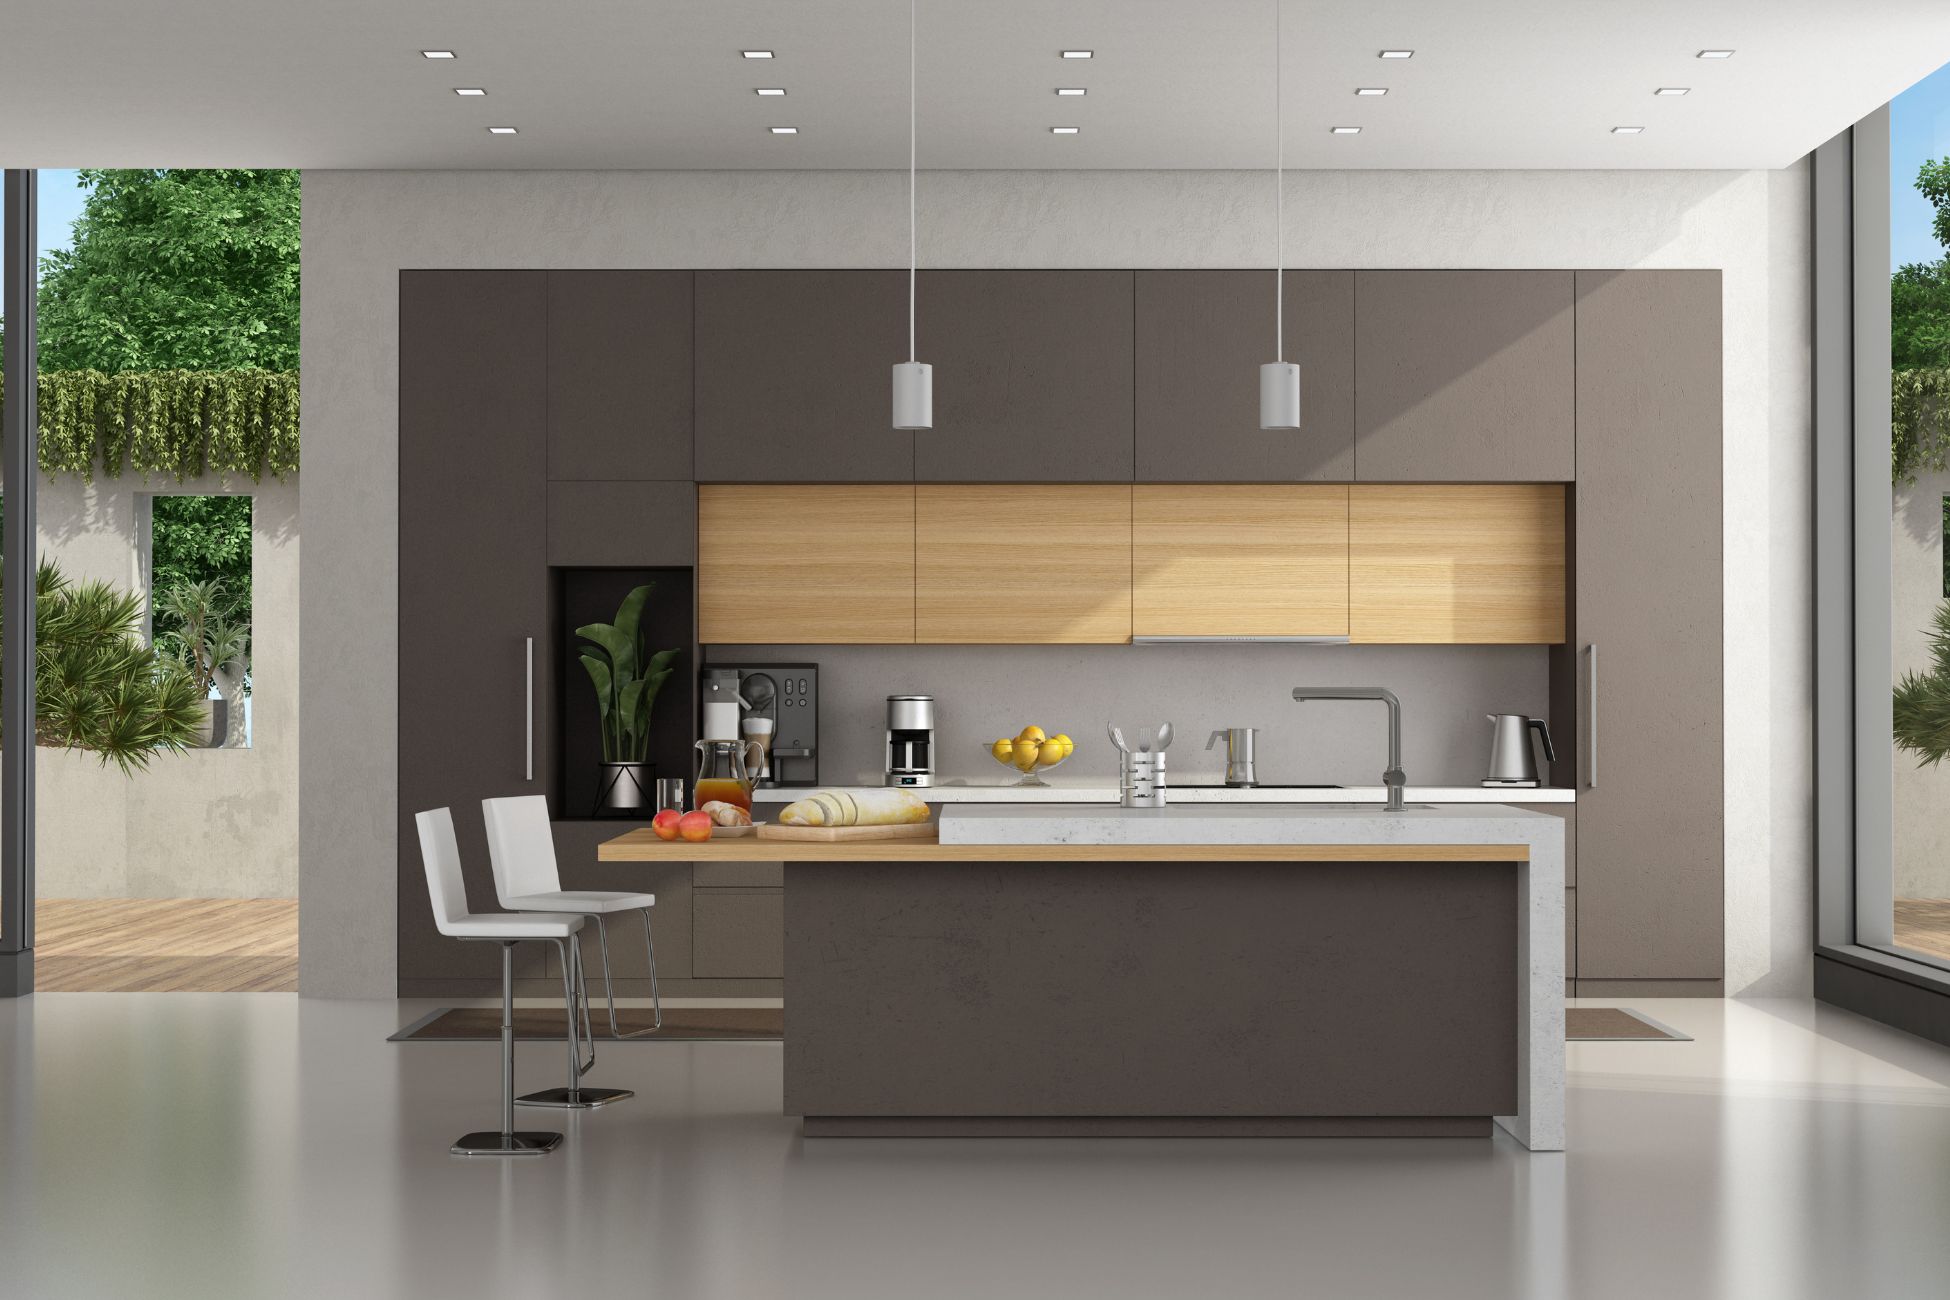 Contemporary kitchen with concrete countertop